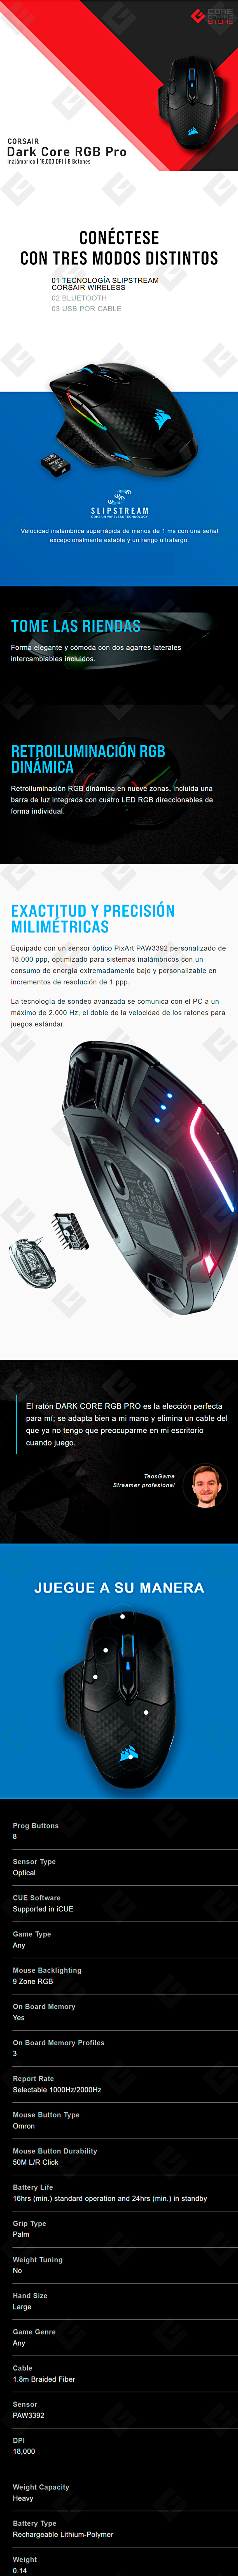 Mouse Corsair Dark Core RGB Pro, Negro, Inalámbrico, 8 Botones, 18,000 DPI - CH-9315411-NA